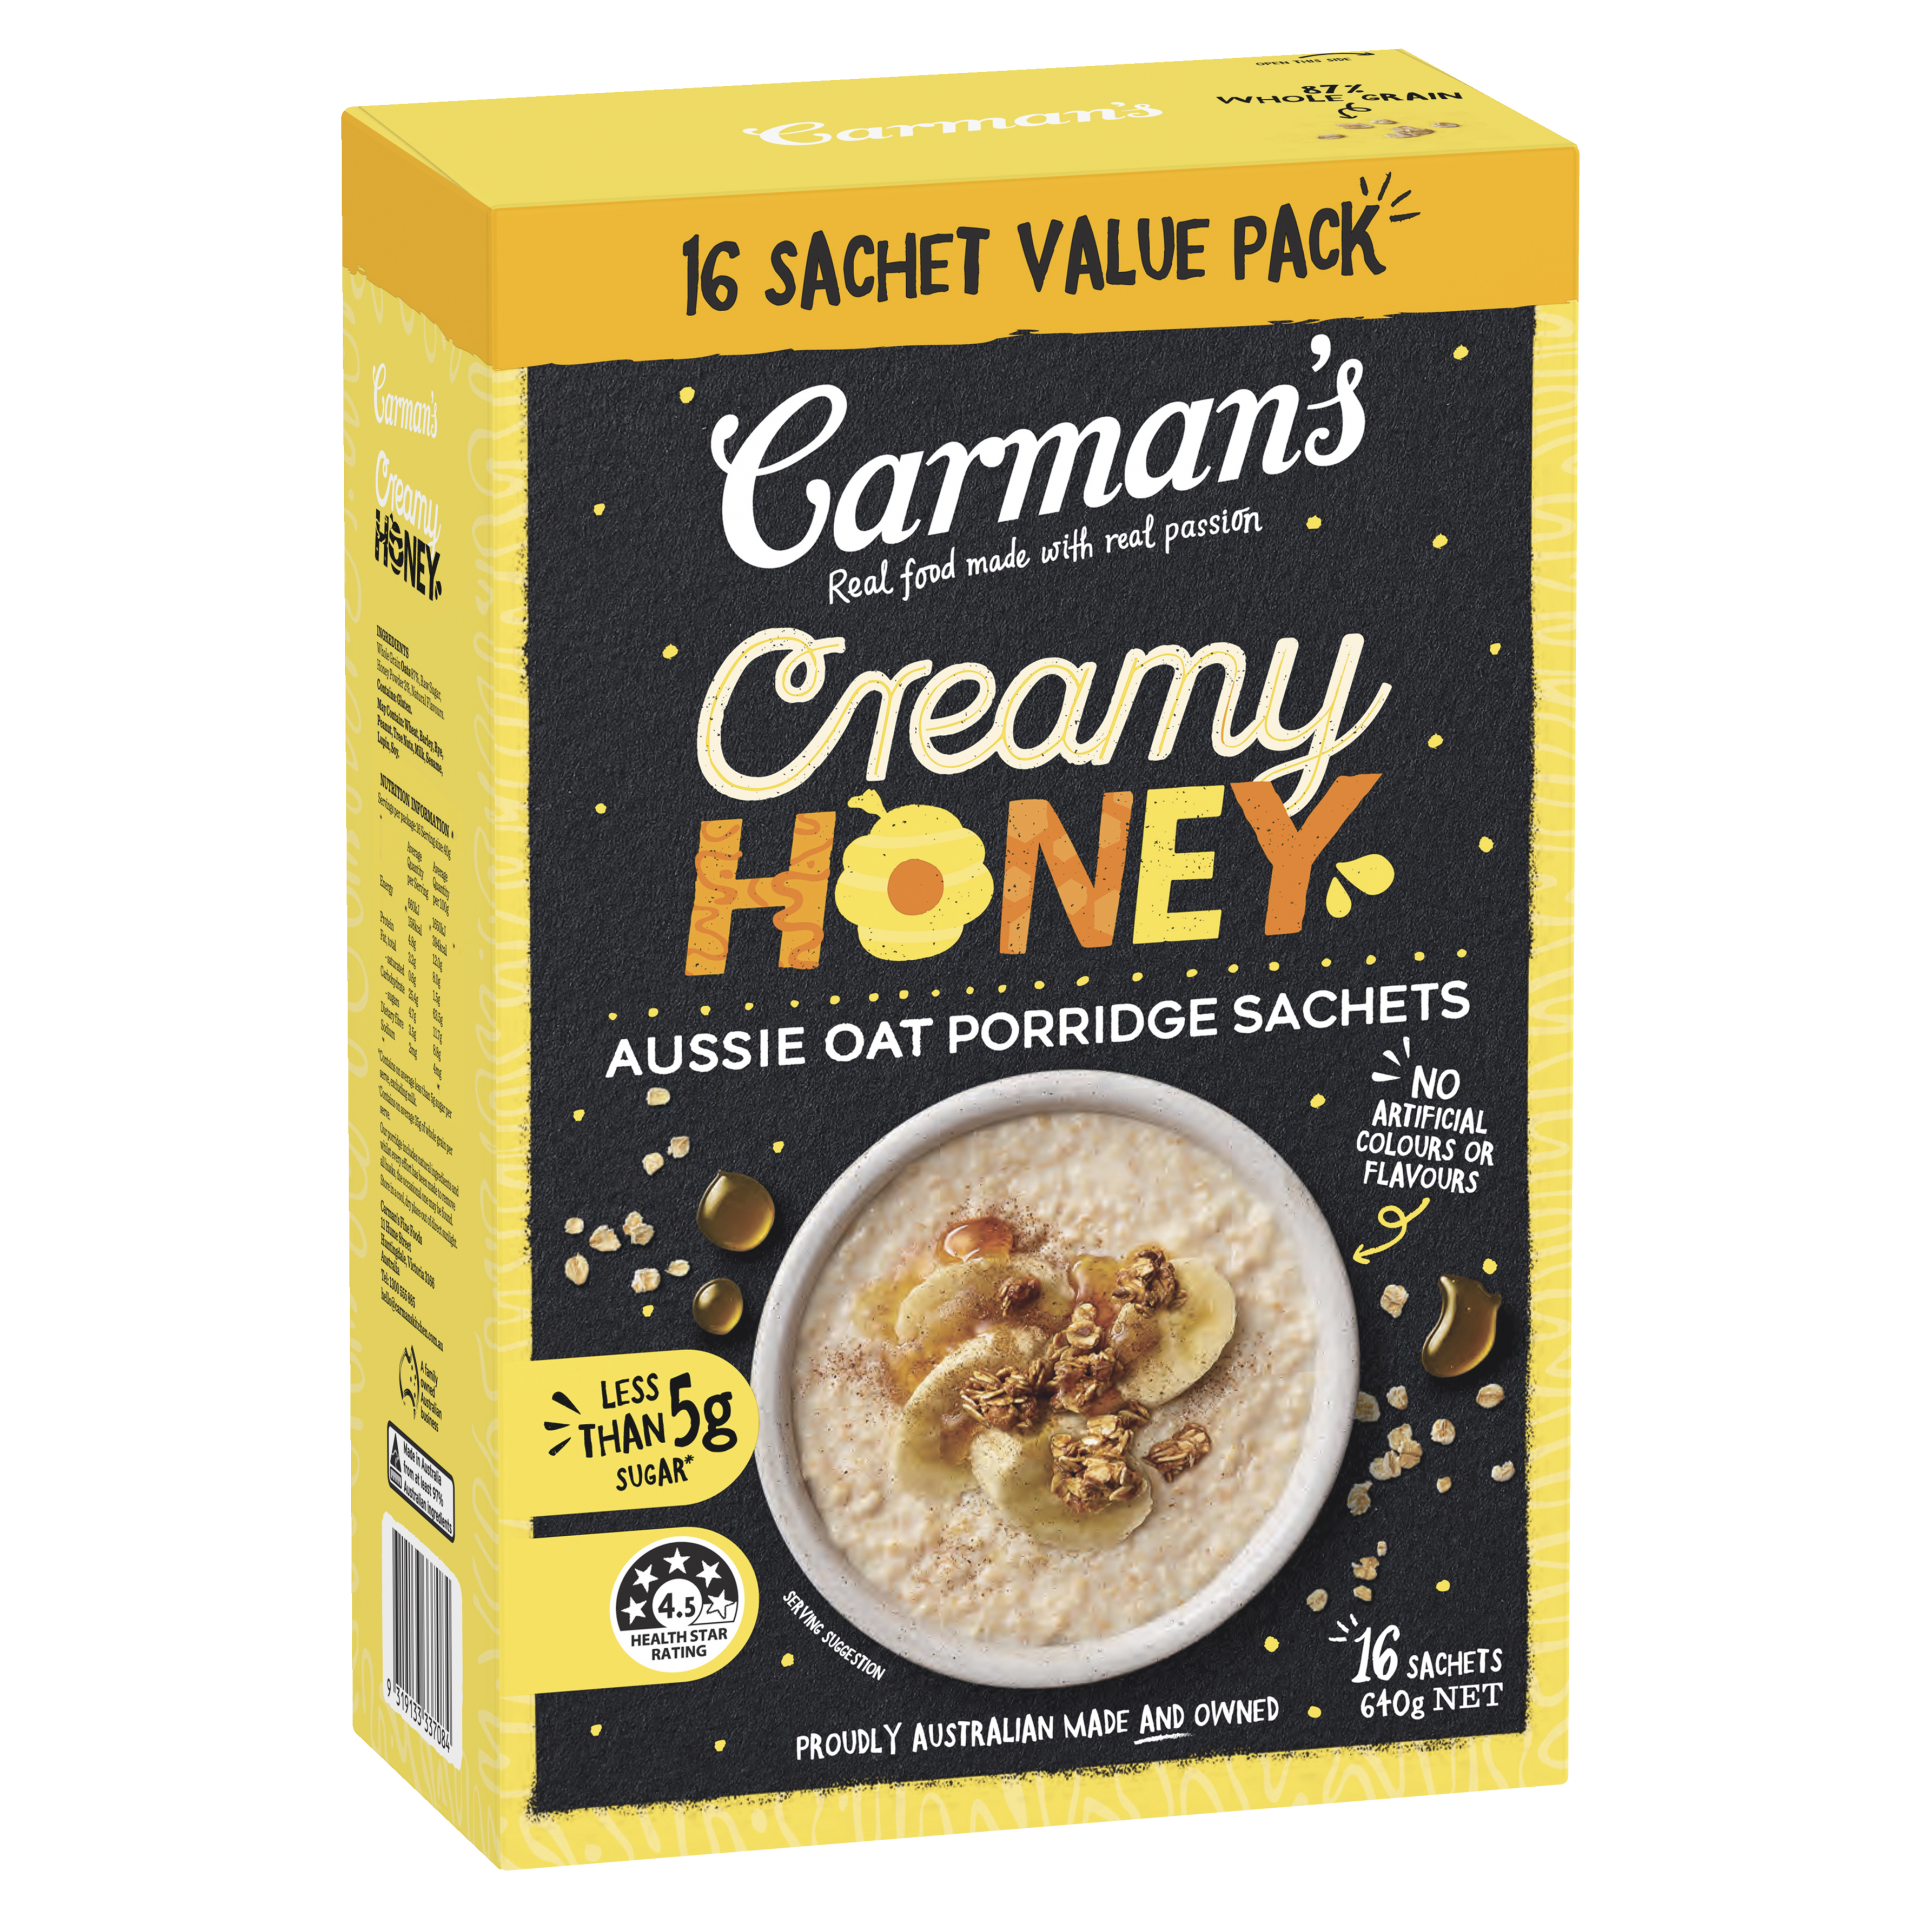 Creamy Honey Aussie Oat Porridge Sachets